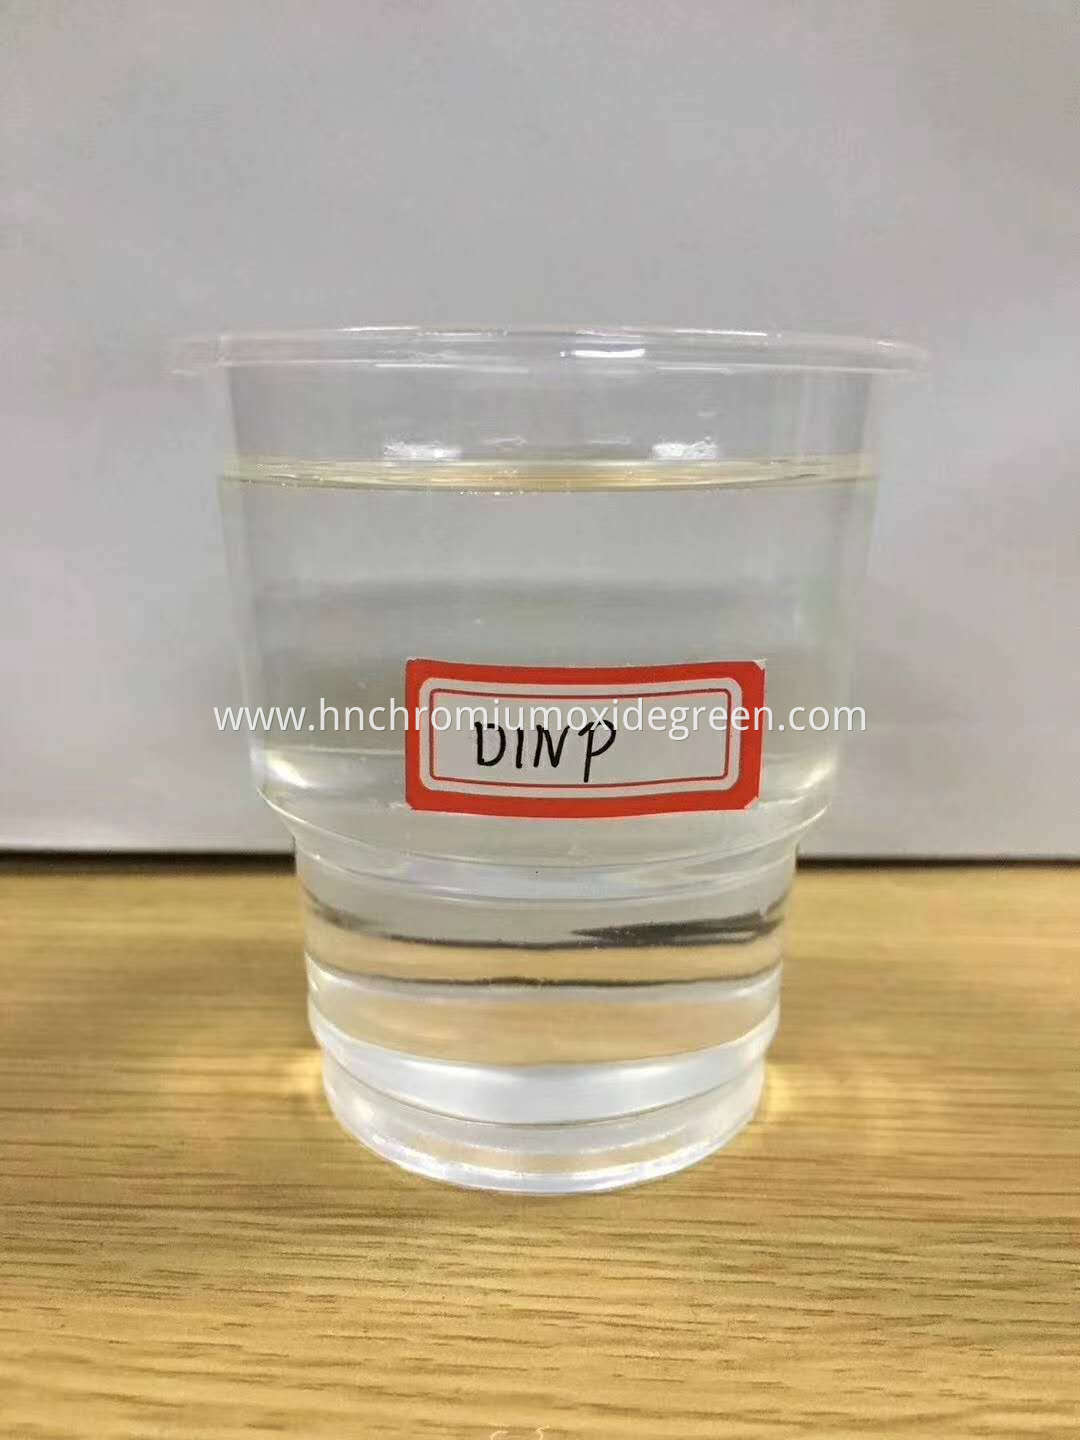 DINP DOP DOTP DOA DBP Triethyl Citrate Plasticizer